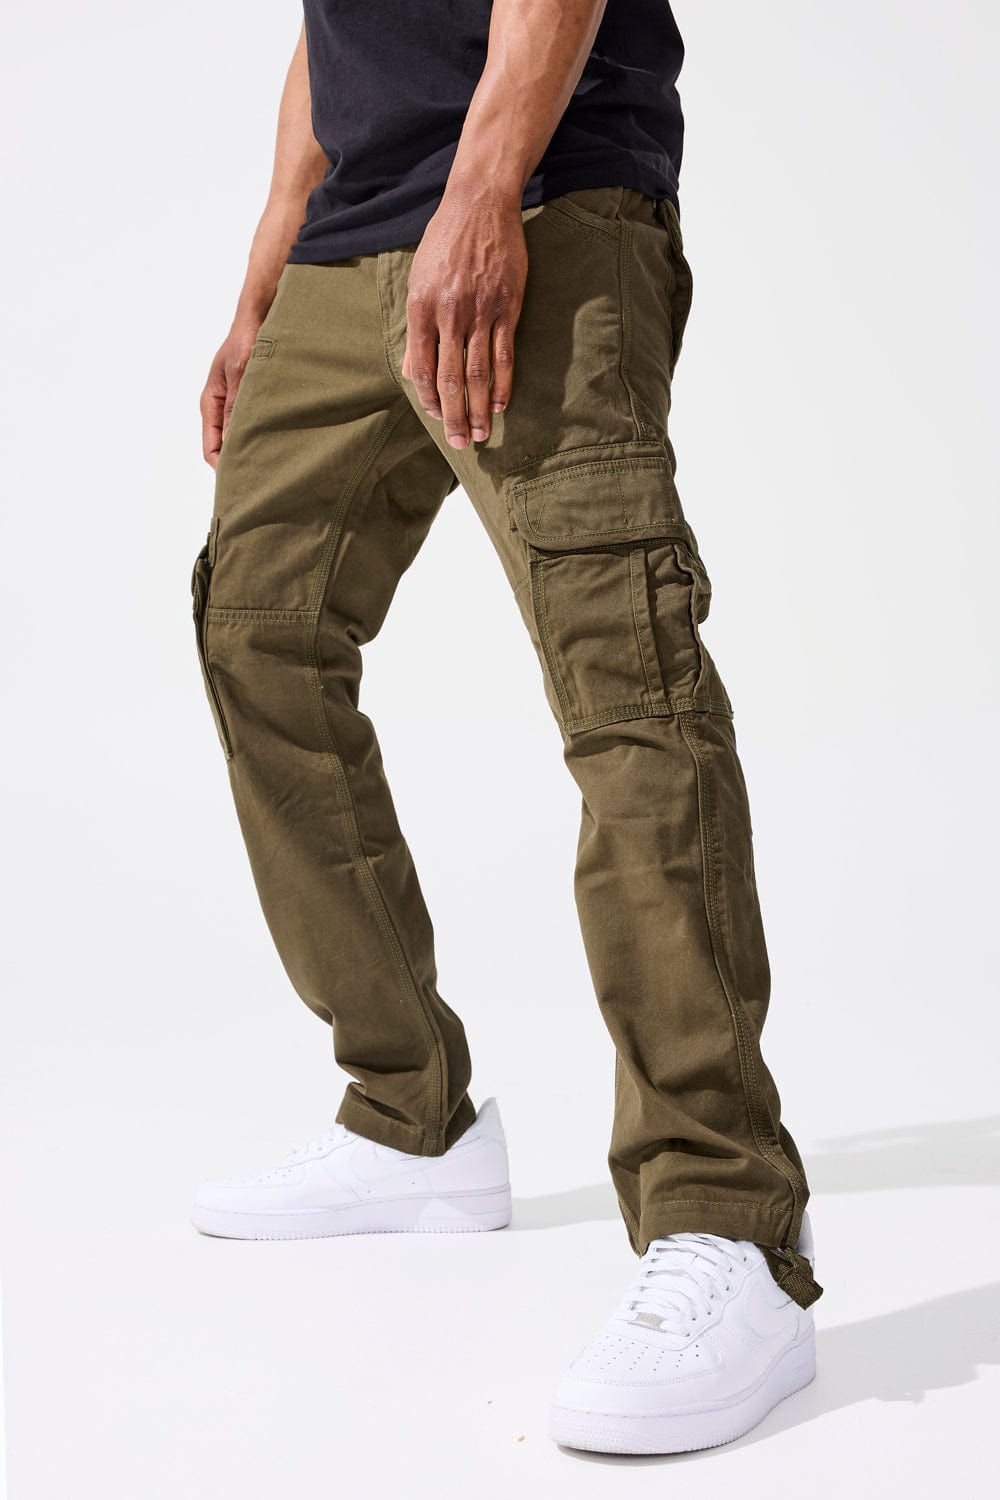 Jordan Craig Xavier - OG Cargo Pants (Army Green) 30/32 / Army Green